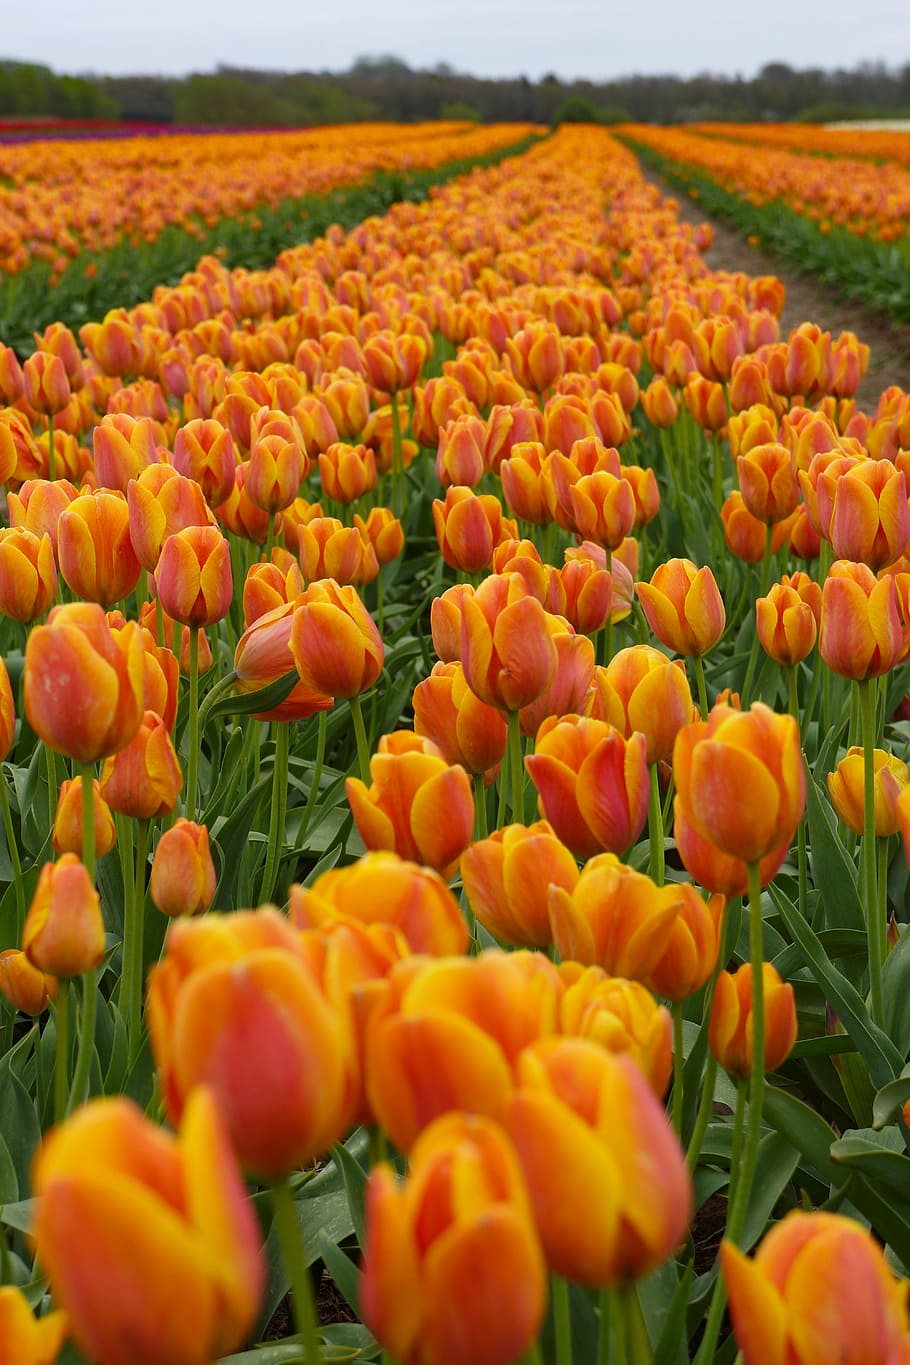 tulips, tulipanmark, flower, mark, gram, agriculture, field, rural scene, nature, orange color